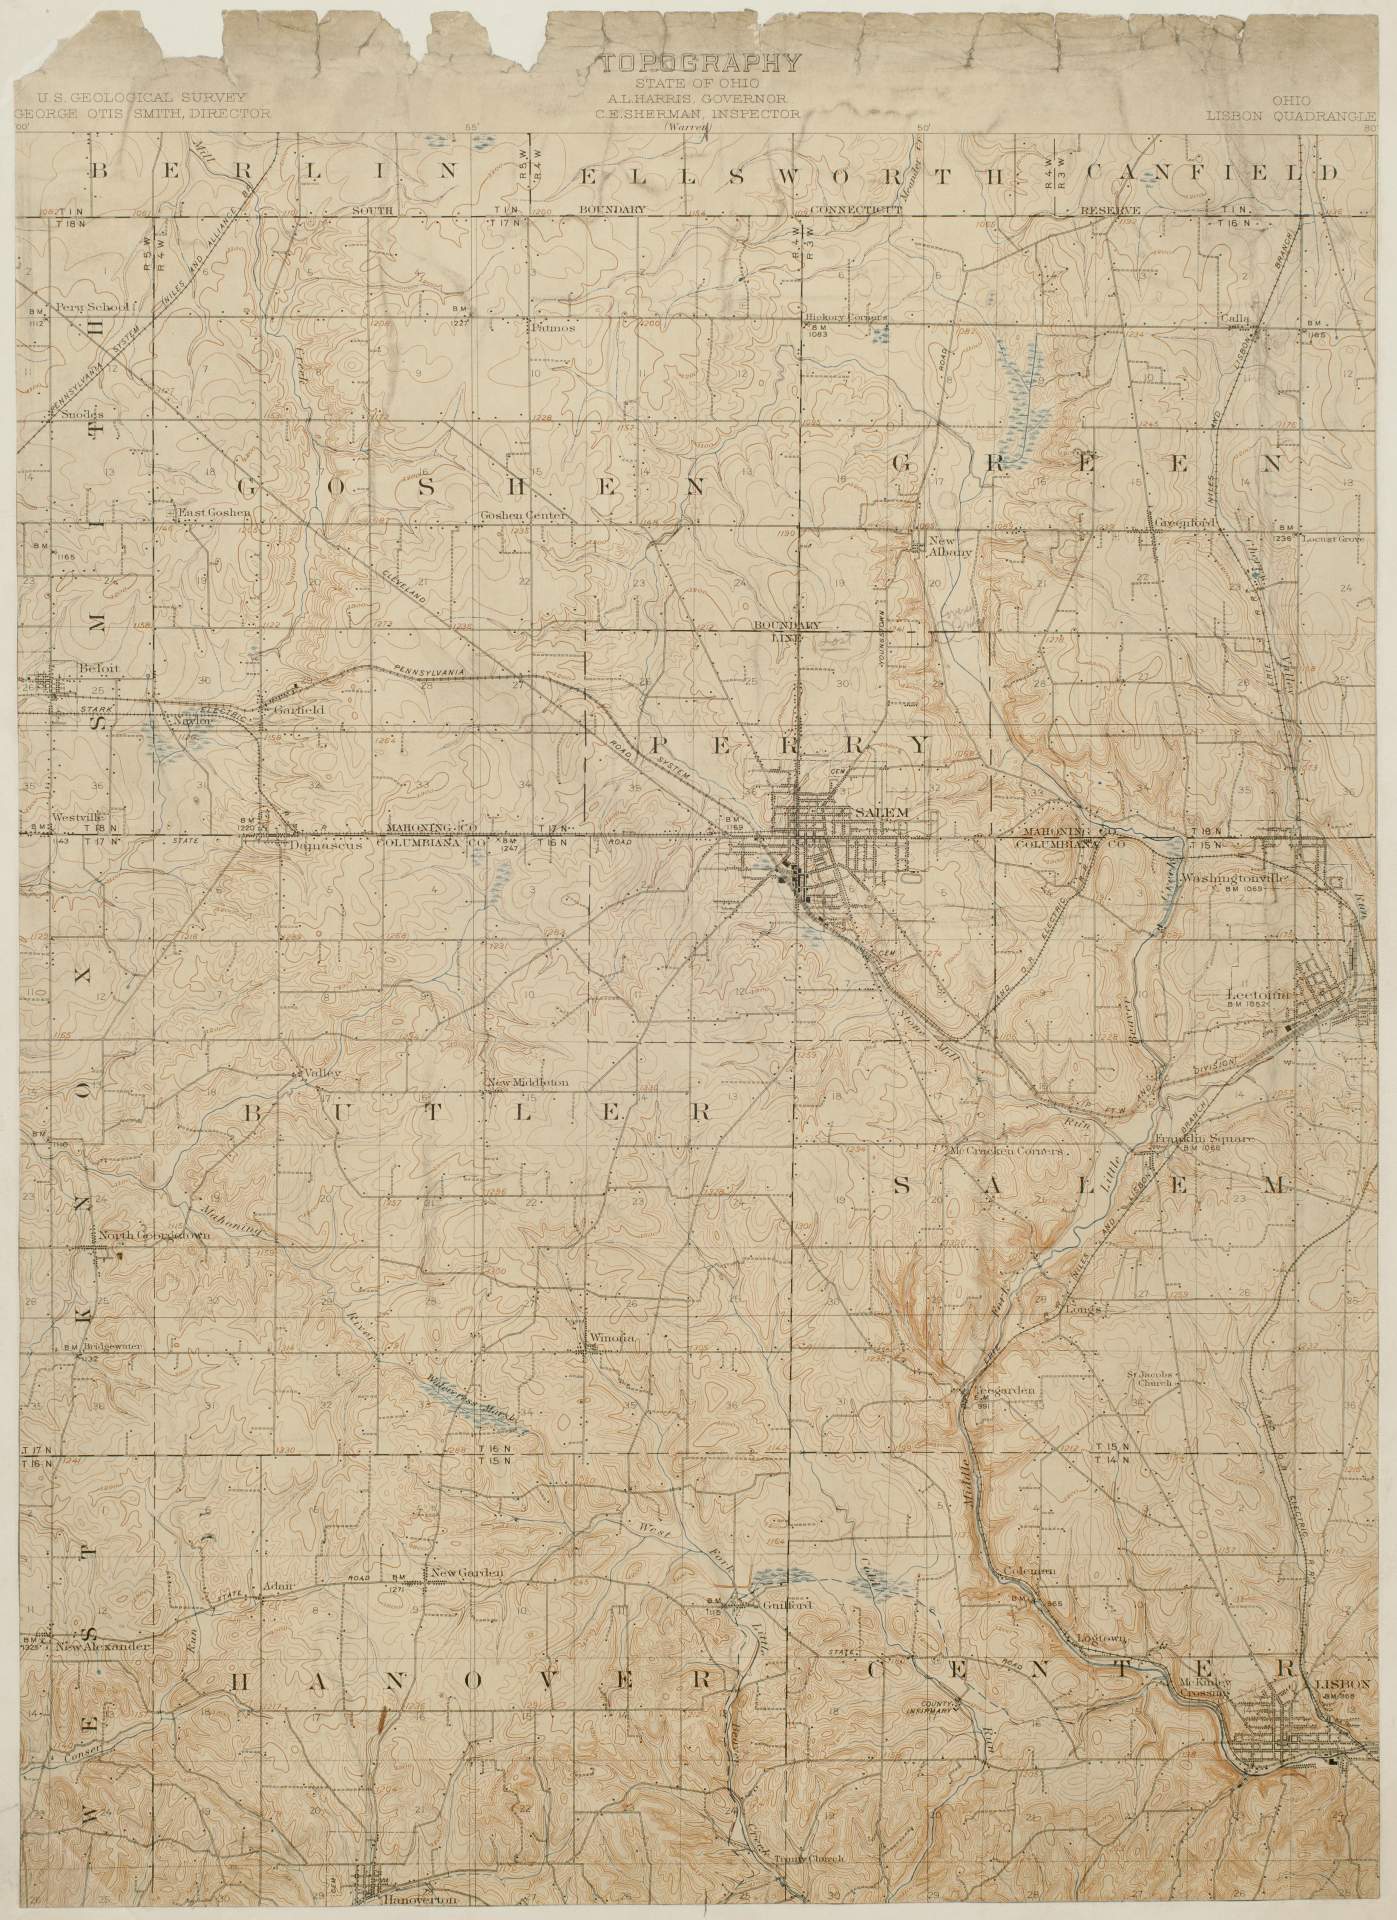 Map of Topography, State of Ohio, Ohio Lisbon Quadrangle from Burchfield's Studio